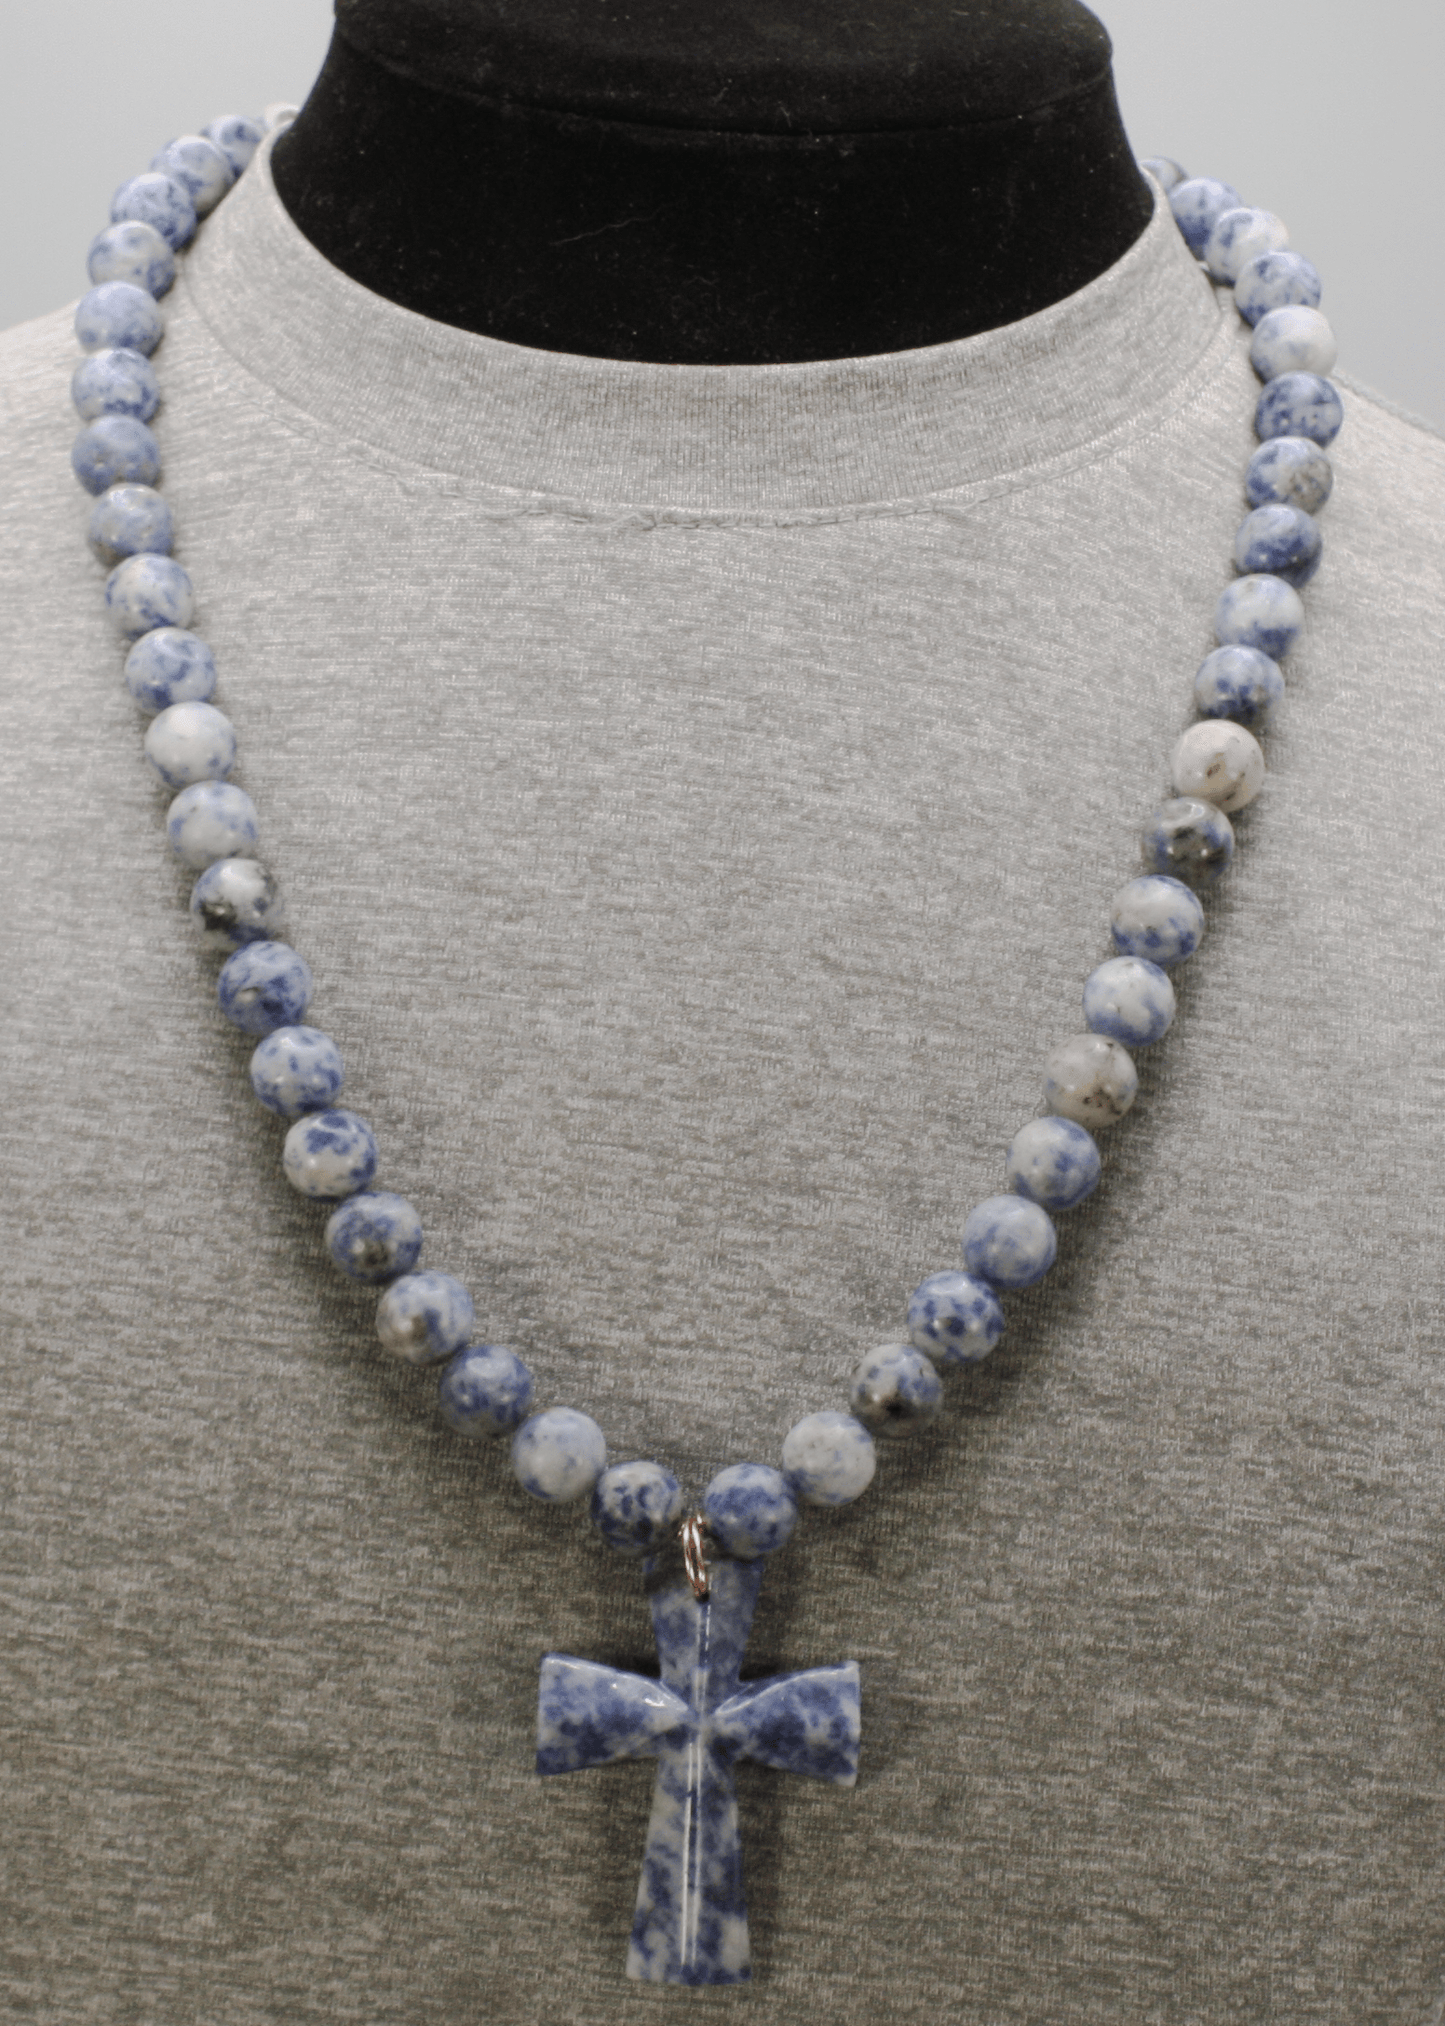 Genuine Sodalite Necklace with Sodalite Cross Pendant - Gift for Men/Woman - Spiritual Accessories - Religious Symbol